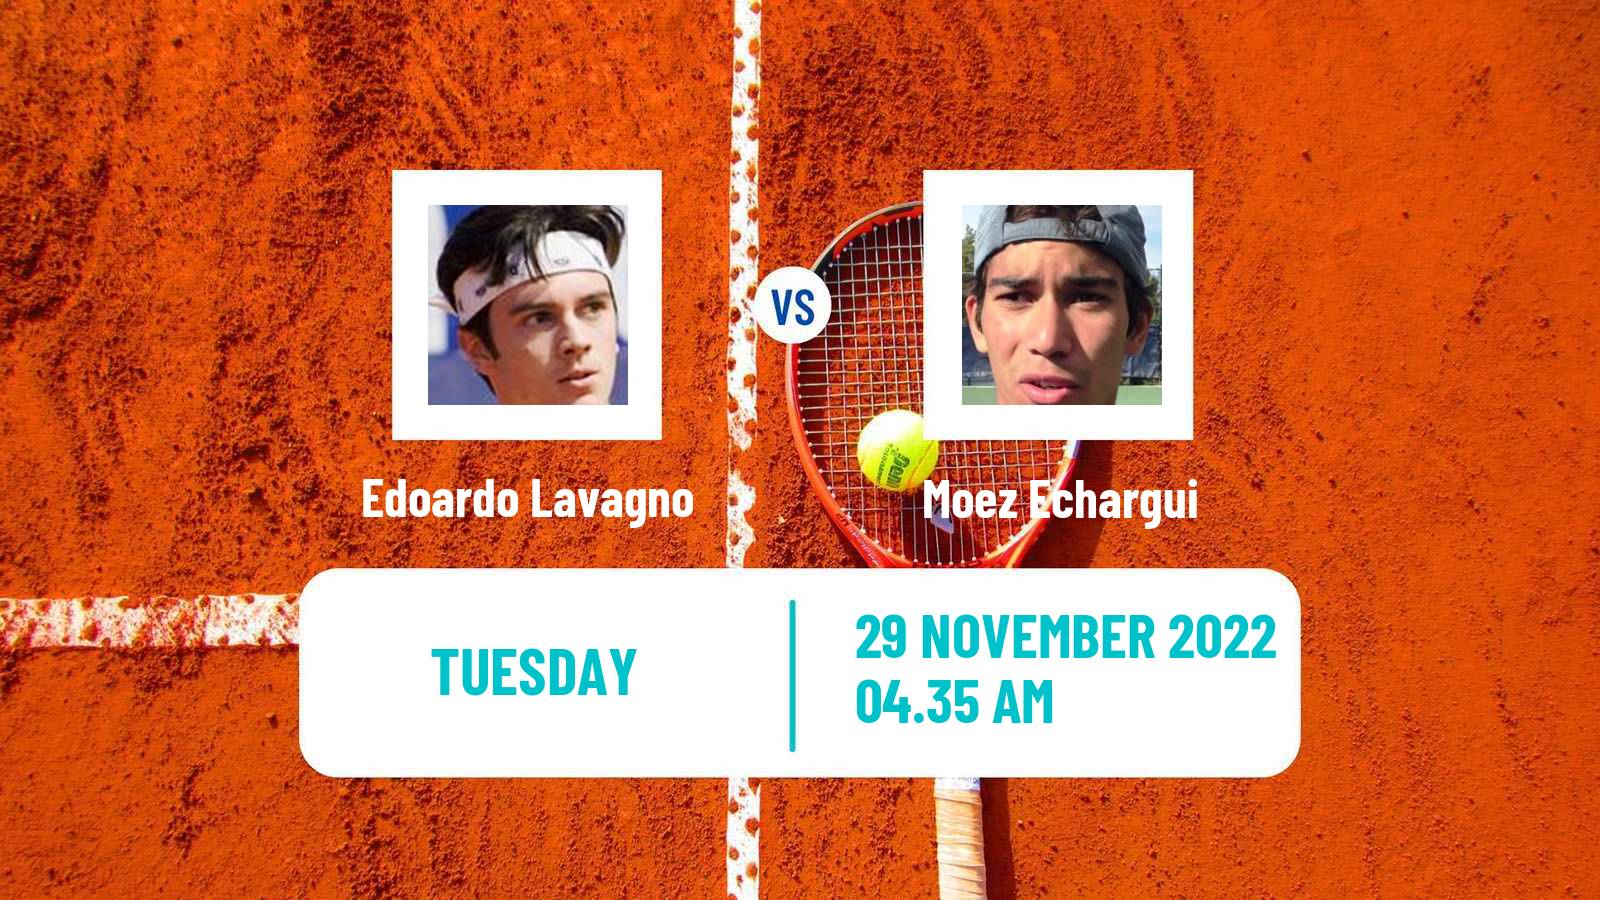 Tennis ATP Challenger Edoardo Lavagno - Moez Echargui